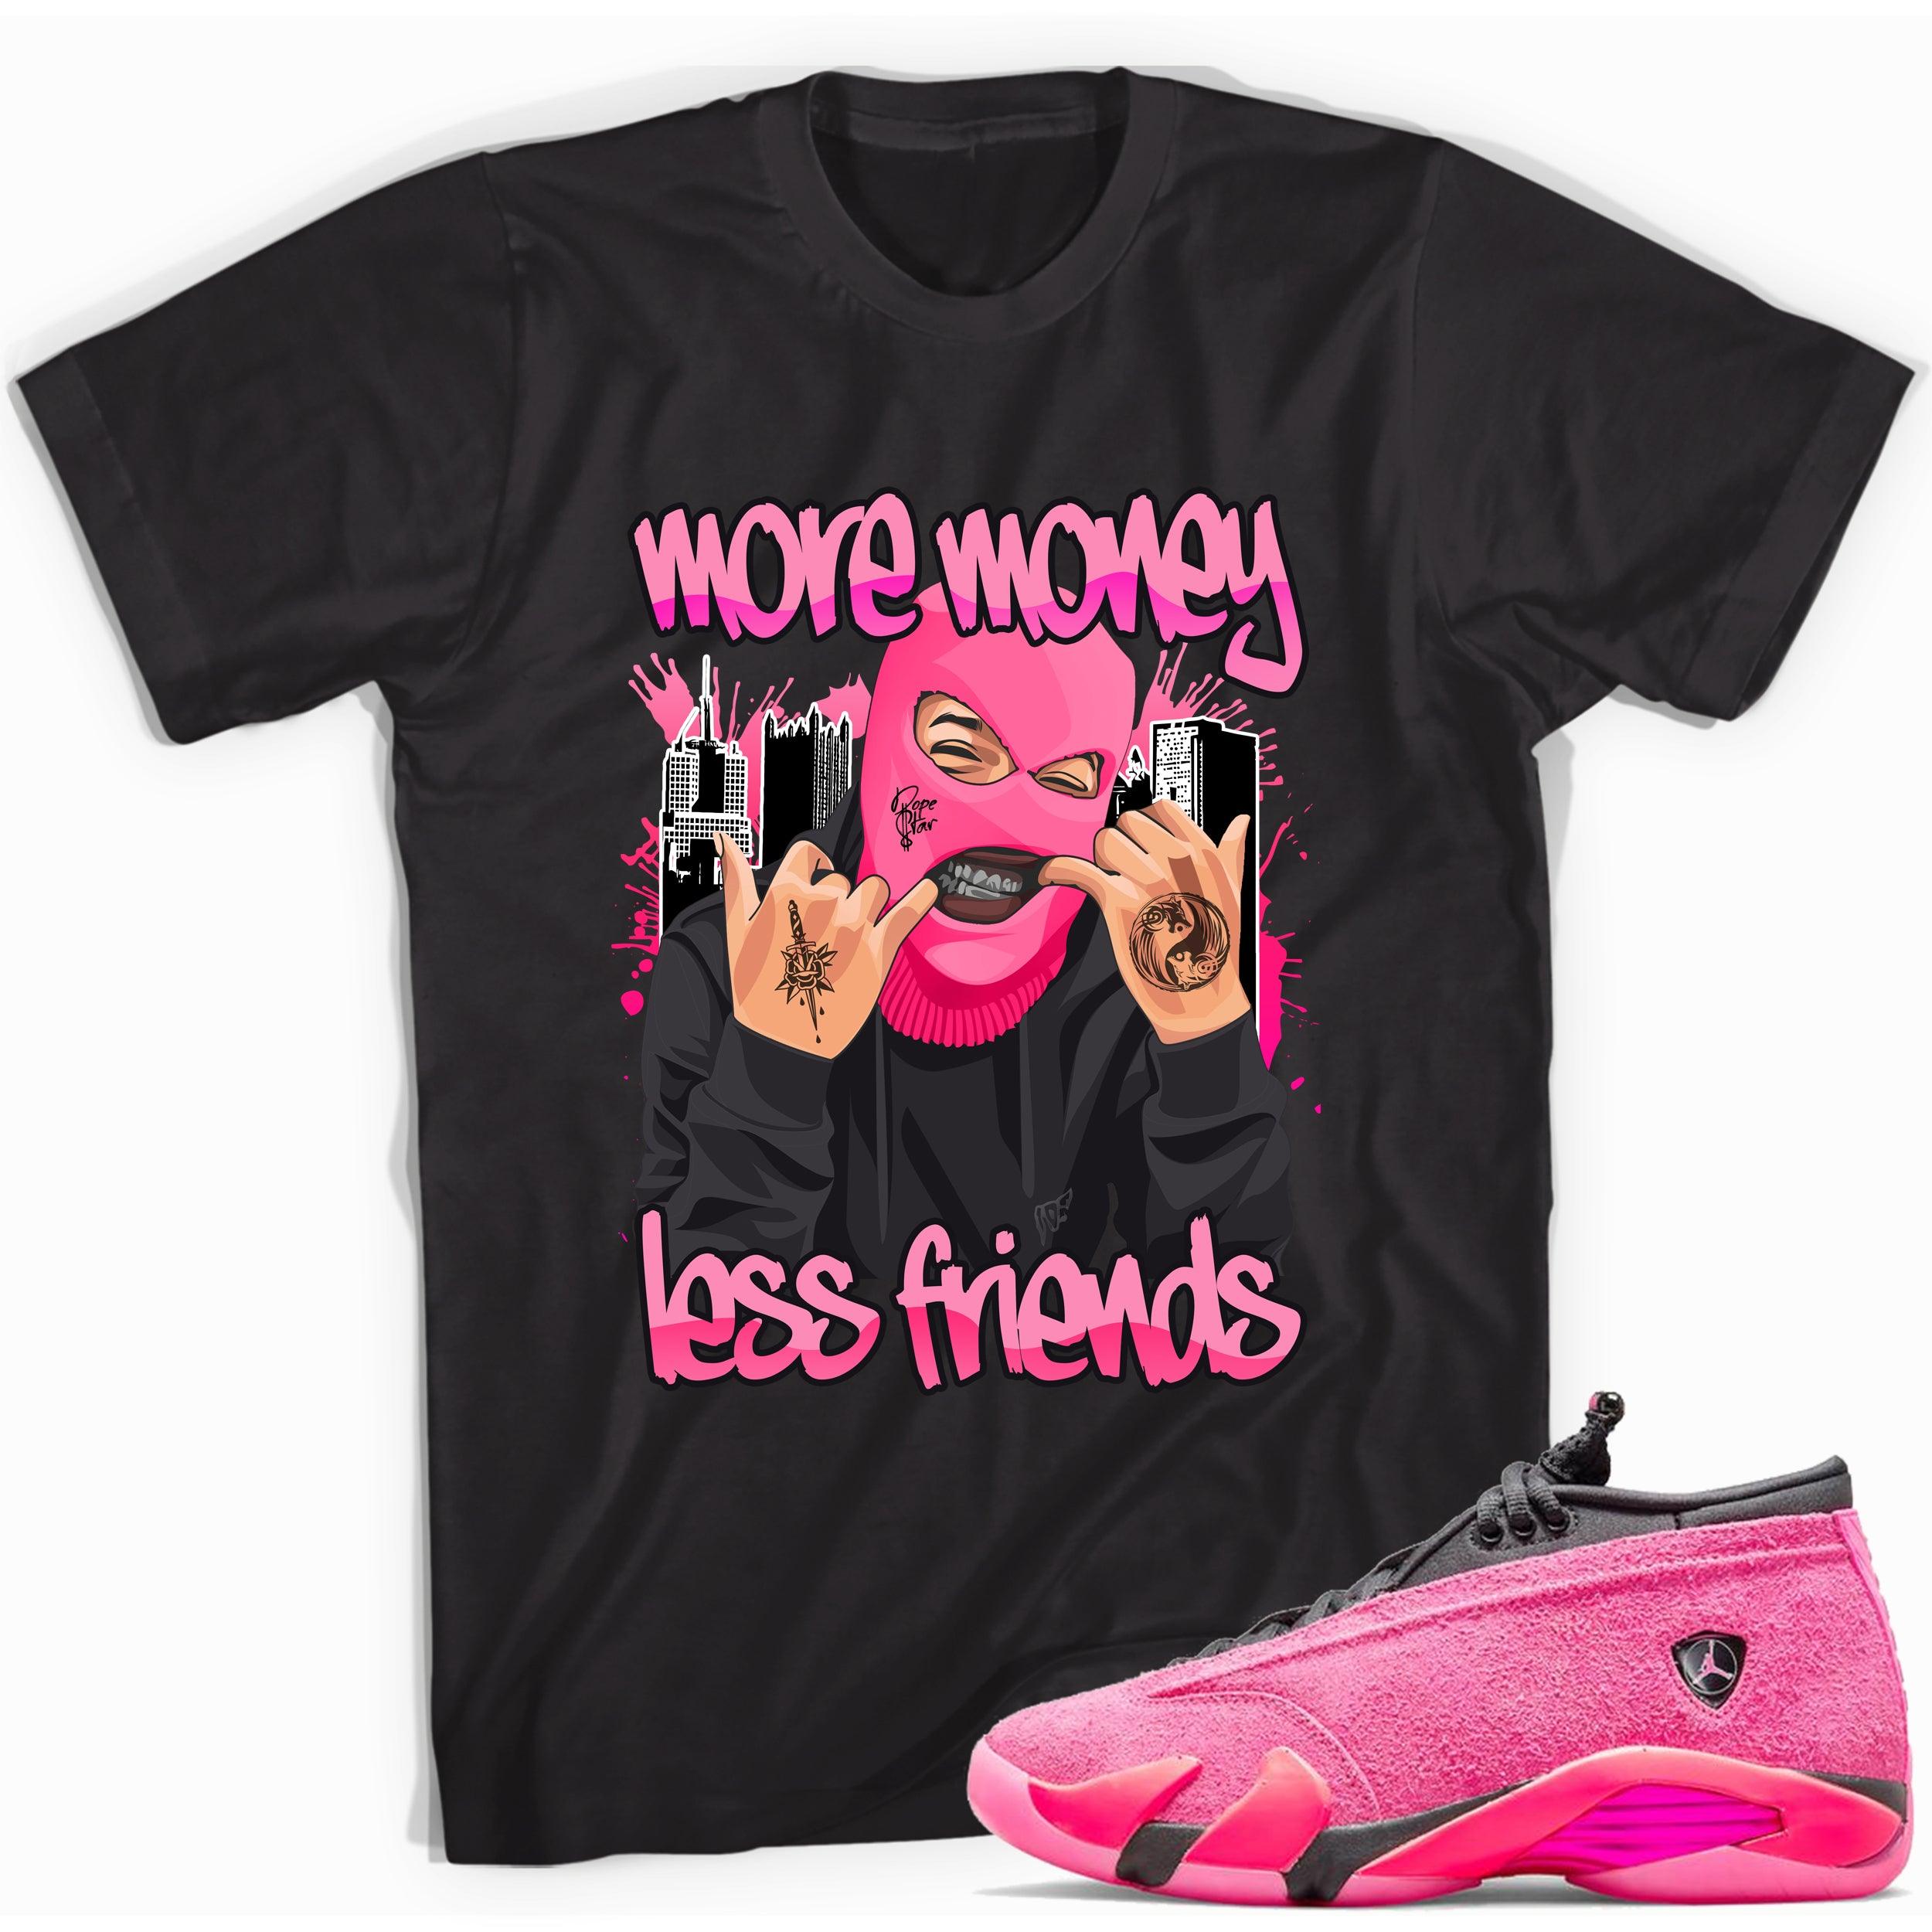 Black More Money Less Friends Shirt Jordan 14s Low Shocking Pink photo